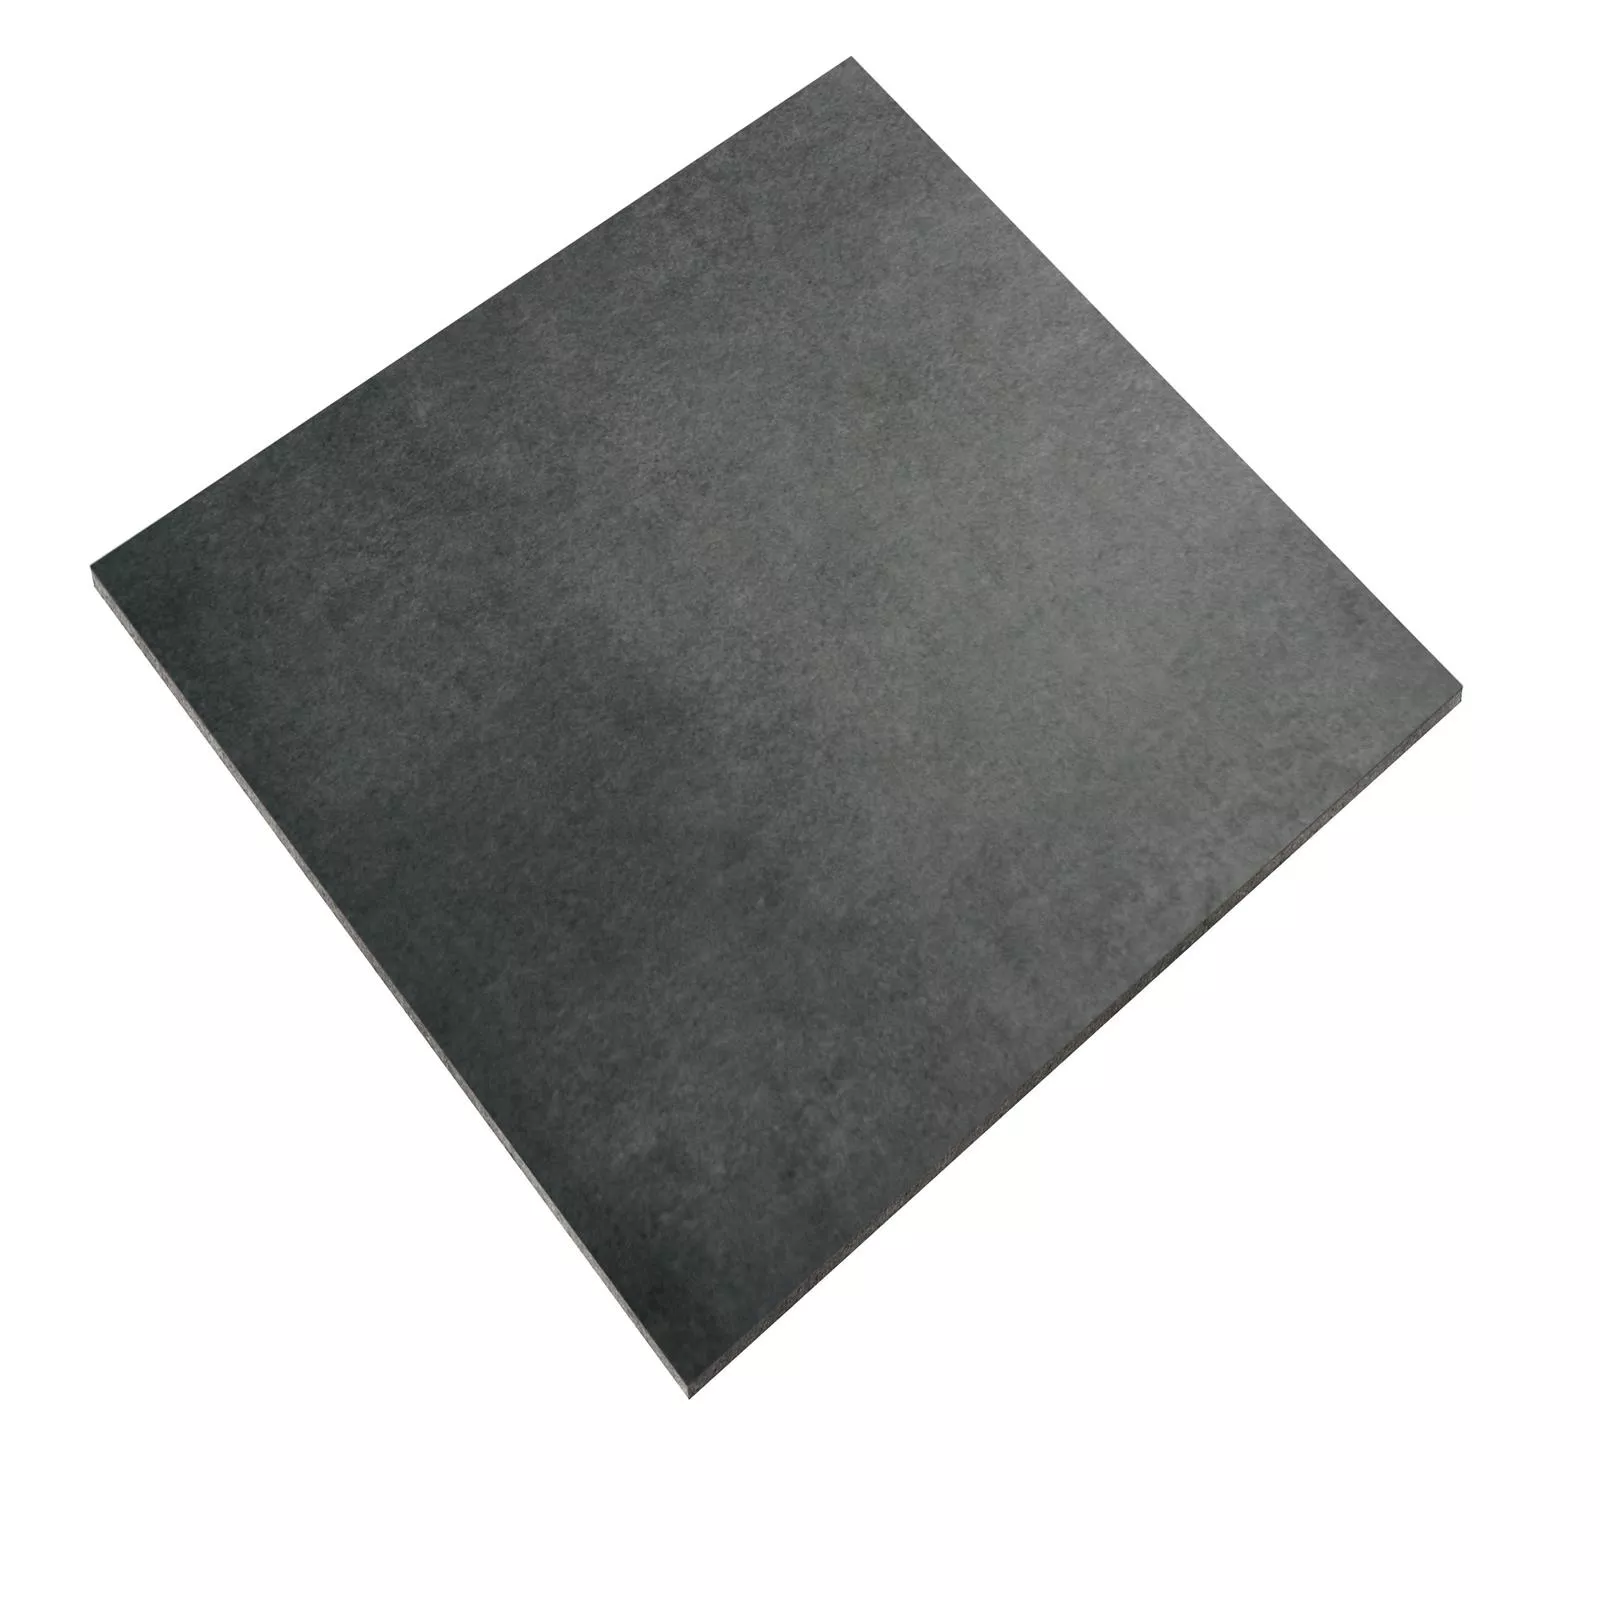 Sample Floor Tiles Beton Optic Alpago Anthracite 40x40cm